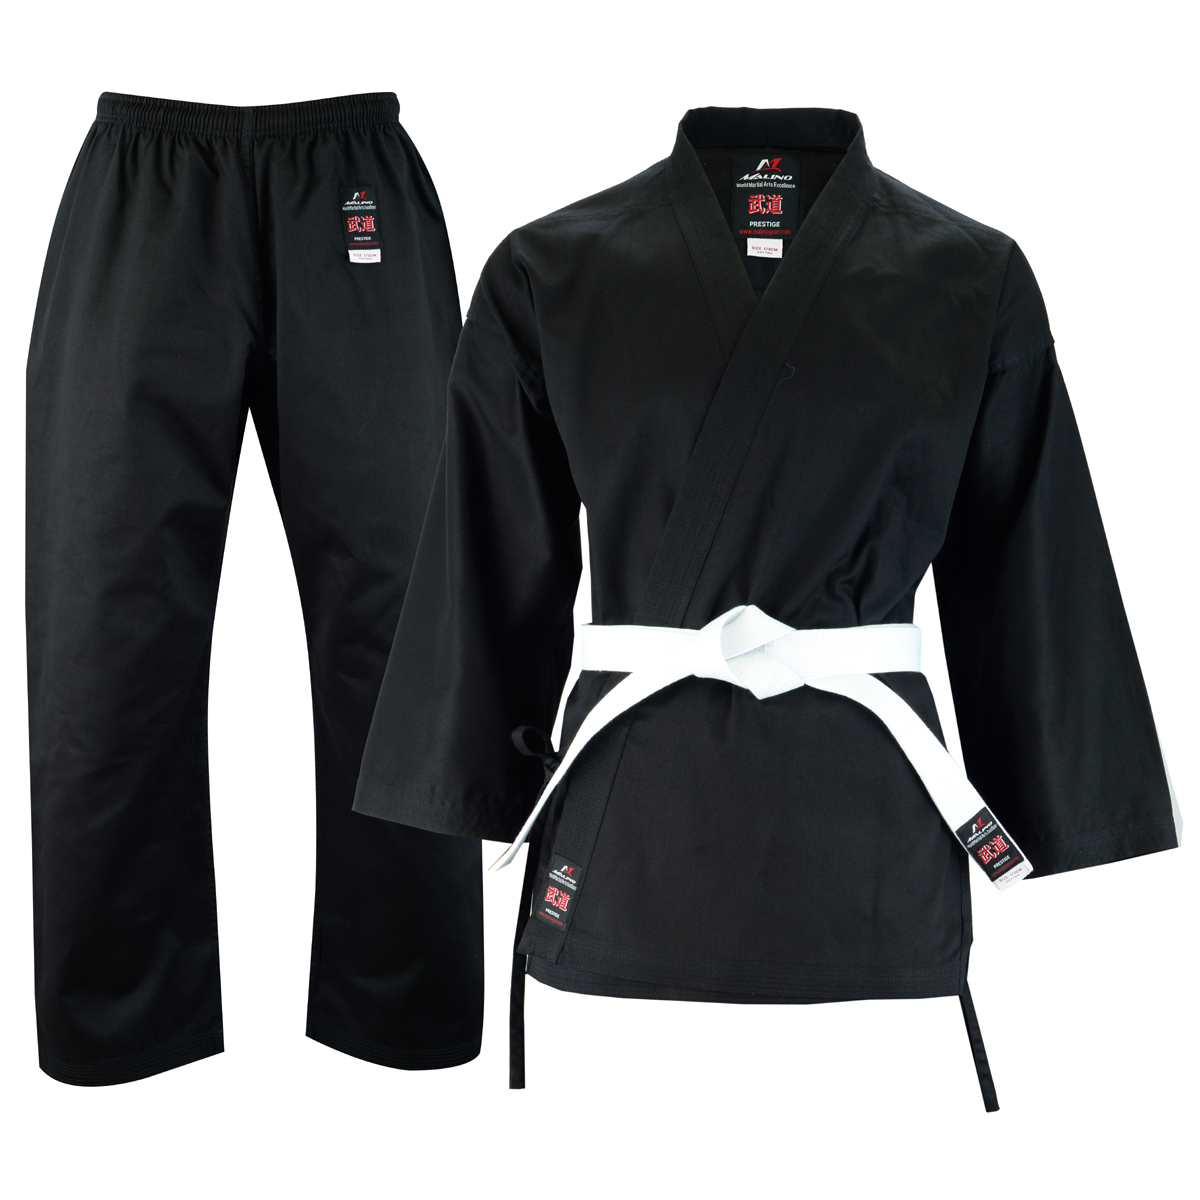 Malino Karate Plain Martial Arts Belt 100% Cotton 4.2cm Sizes 